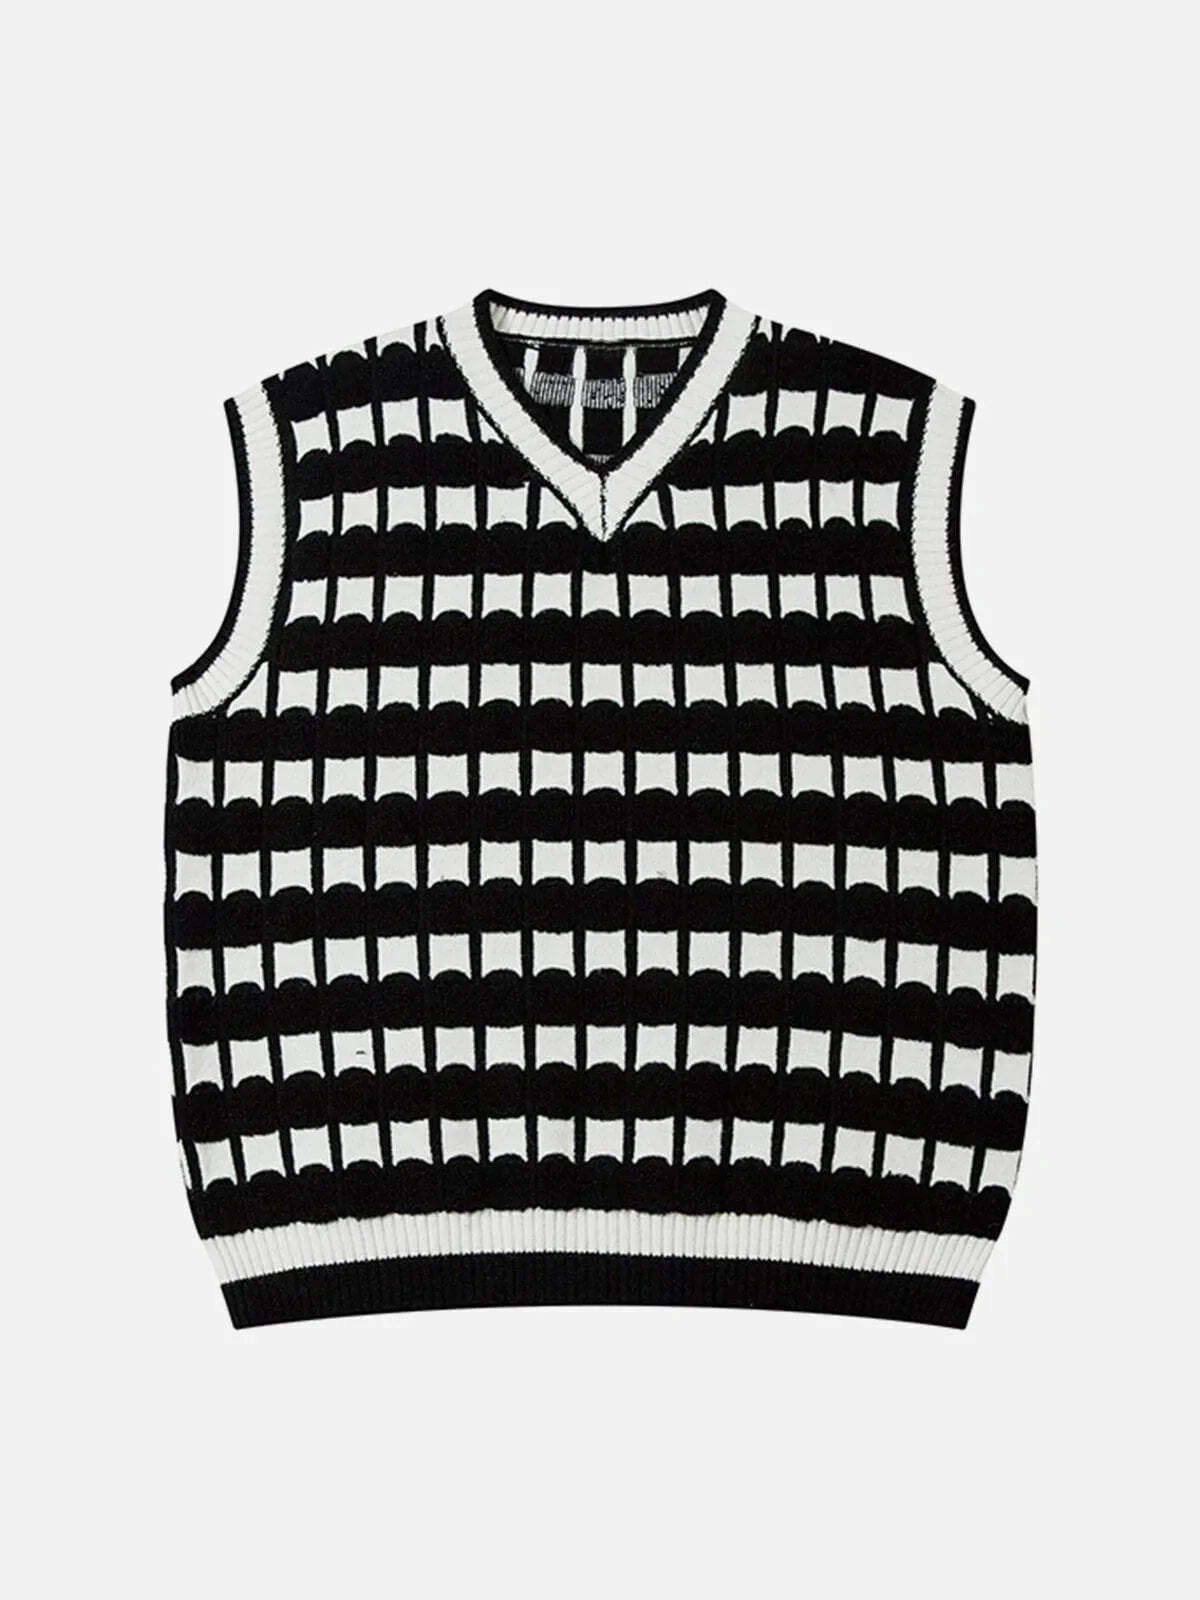 plaid striped sweater vest edgy retro streetwear essential 1063